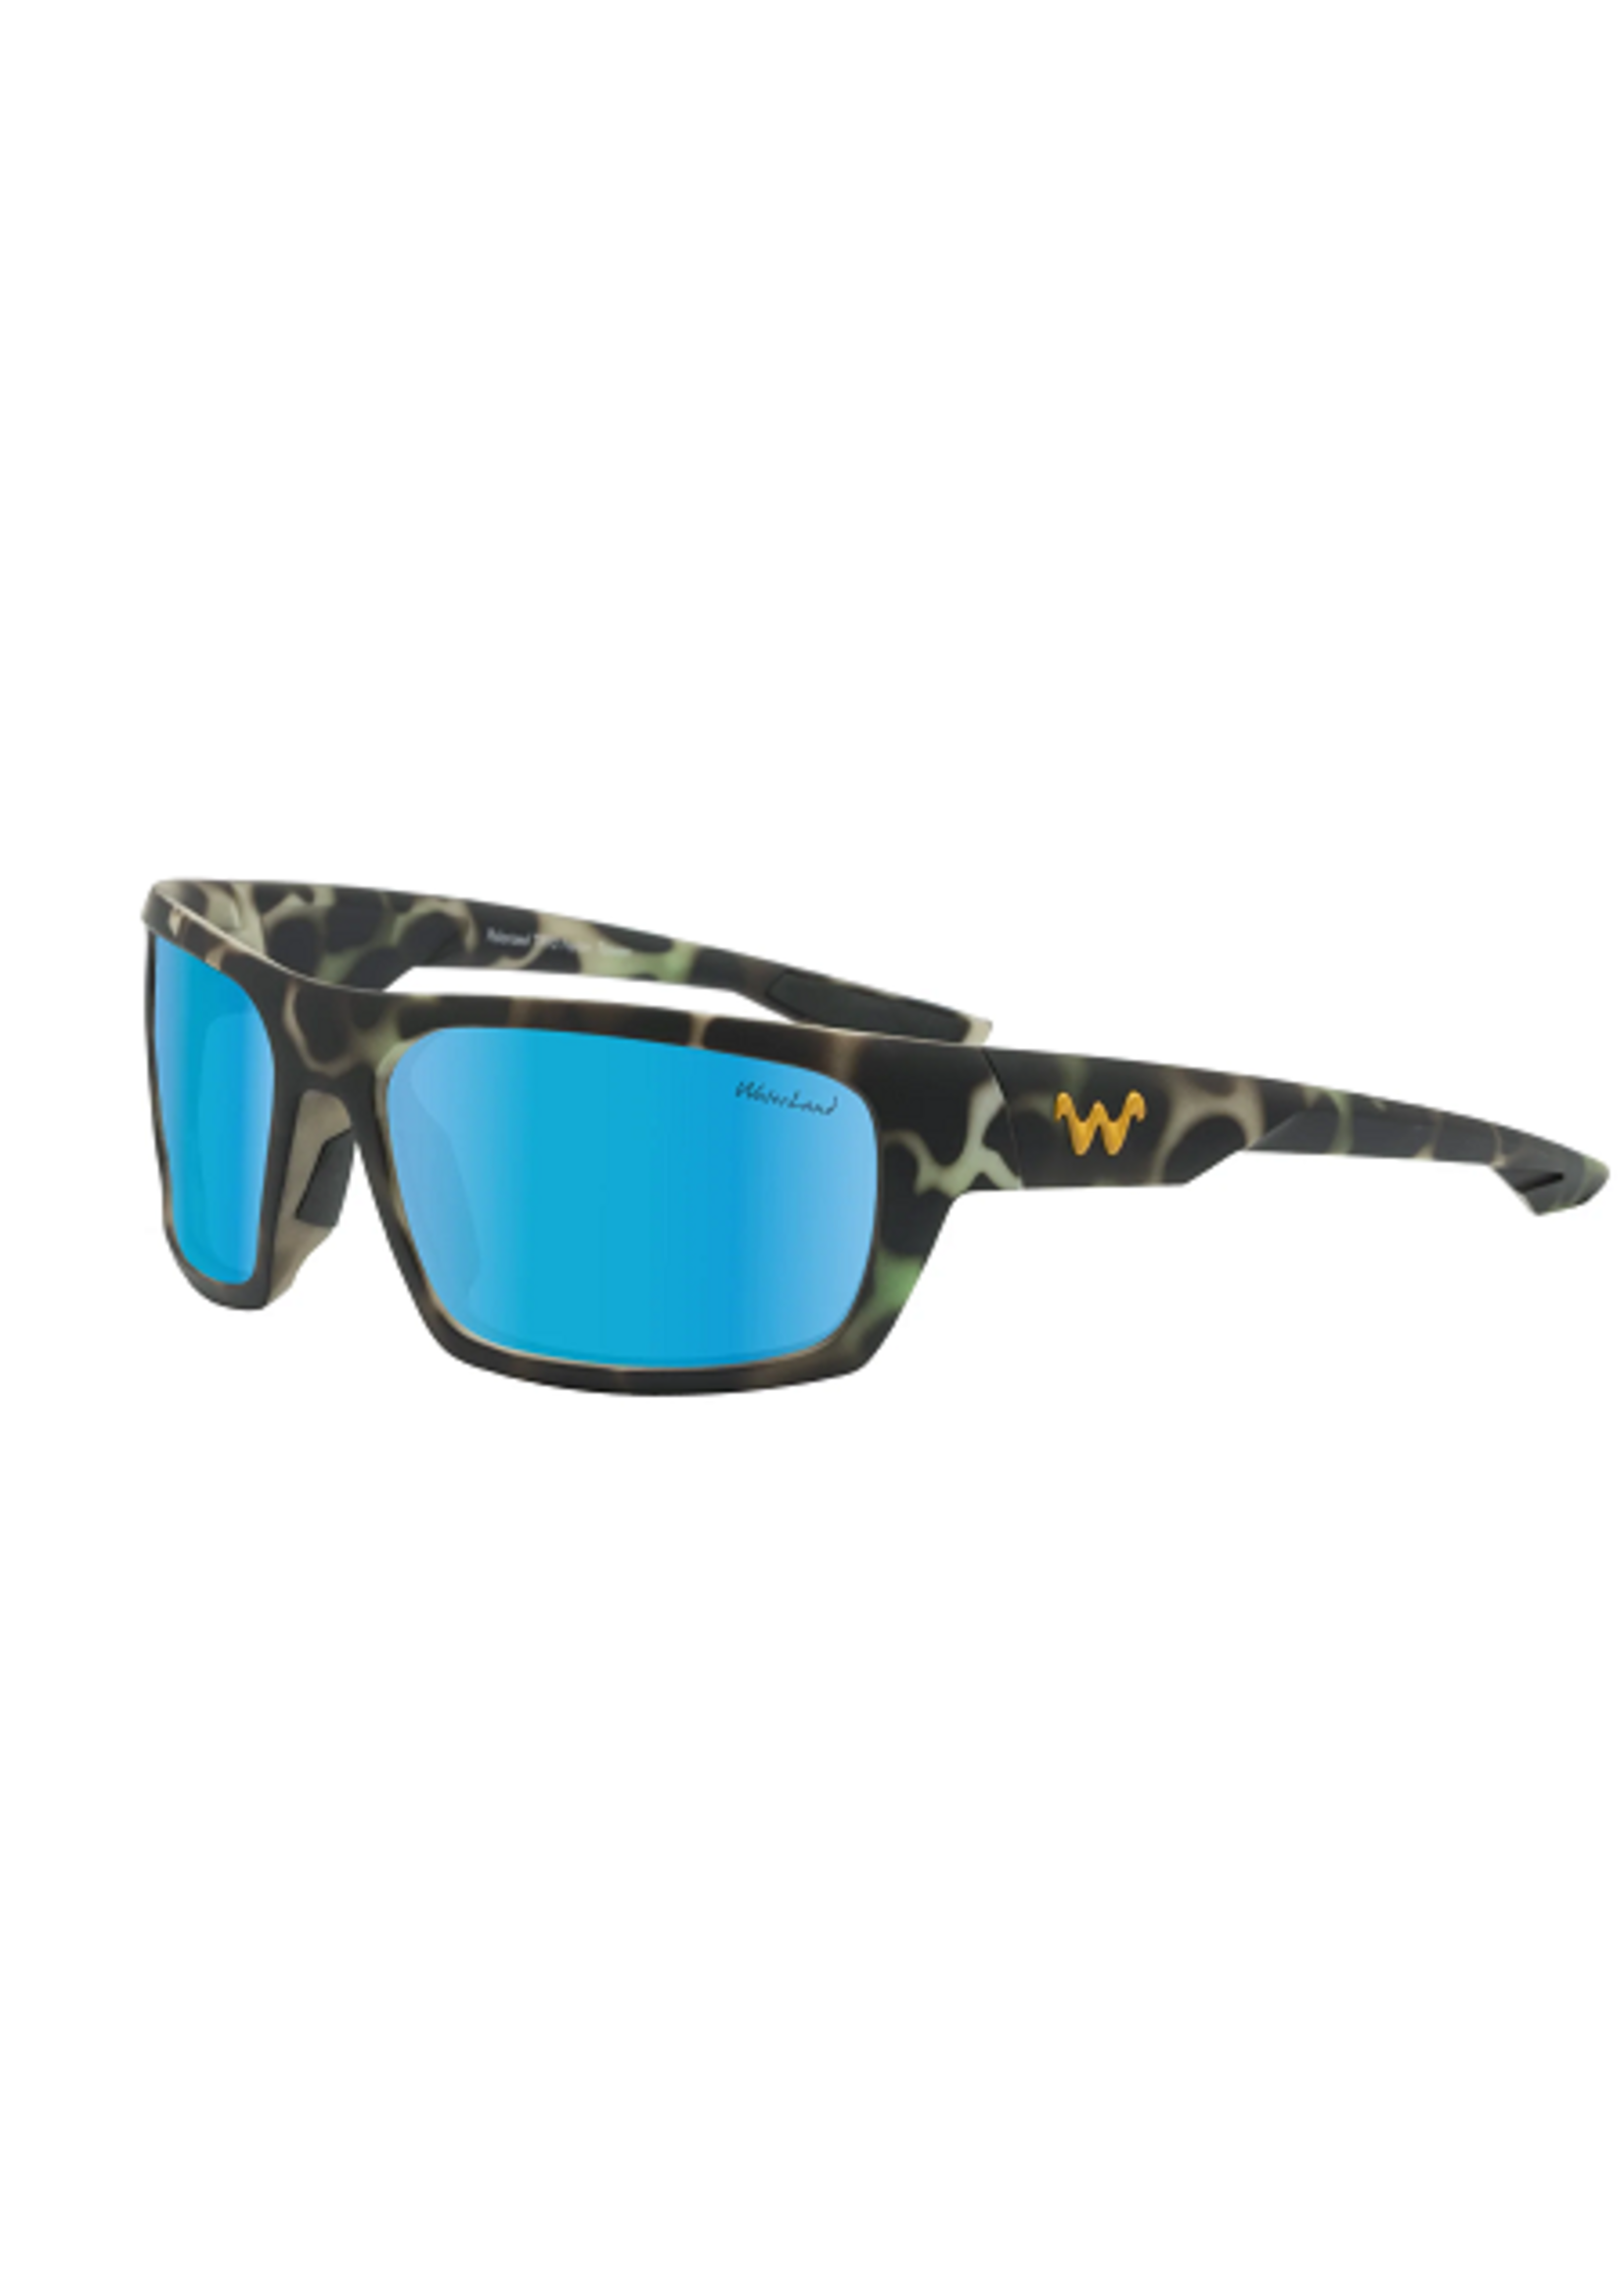 WaterLand Miliken Series Polarized Sunglasses - Tackle Shack